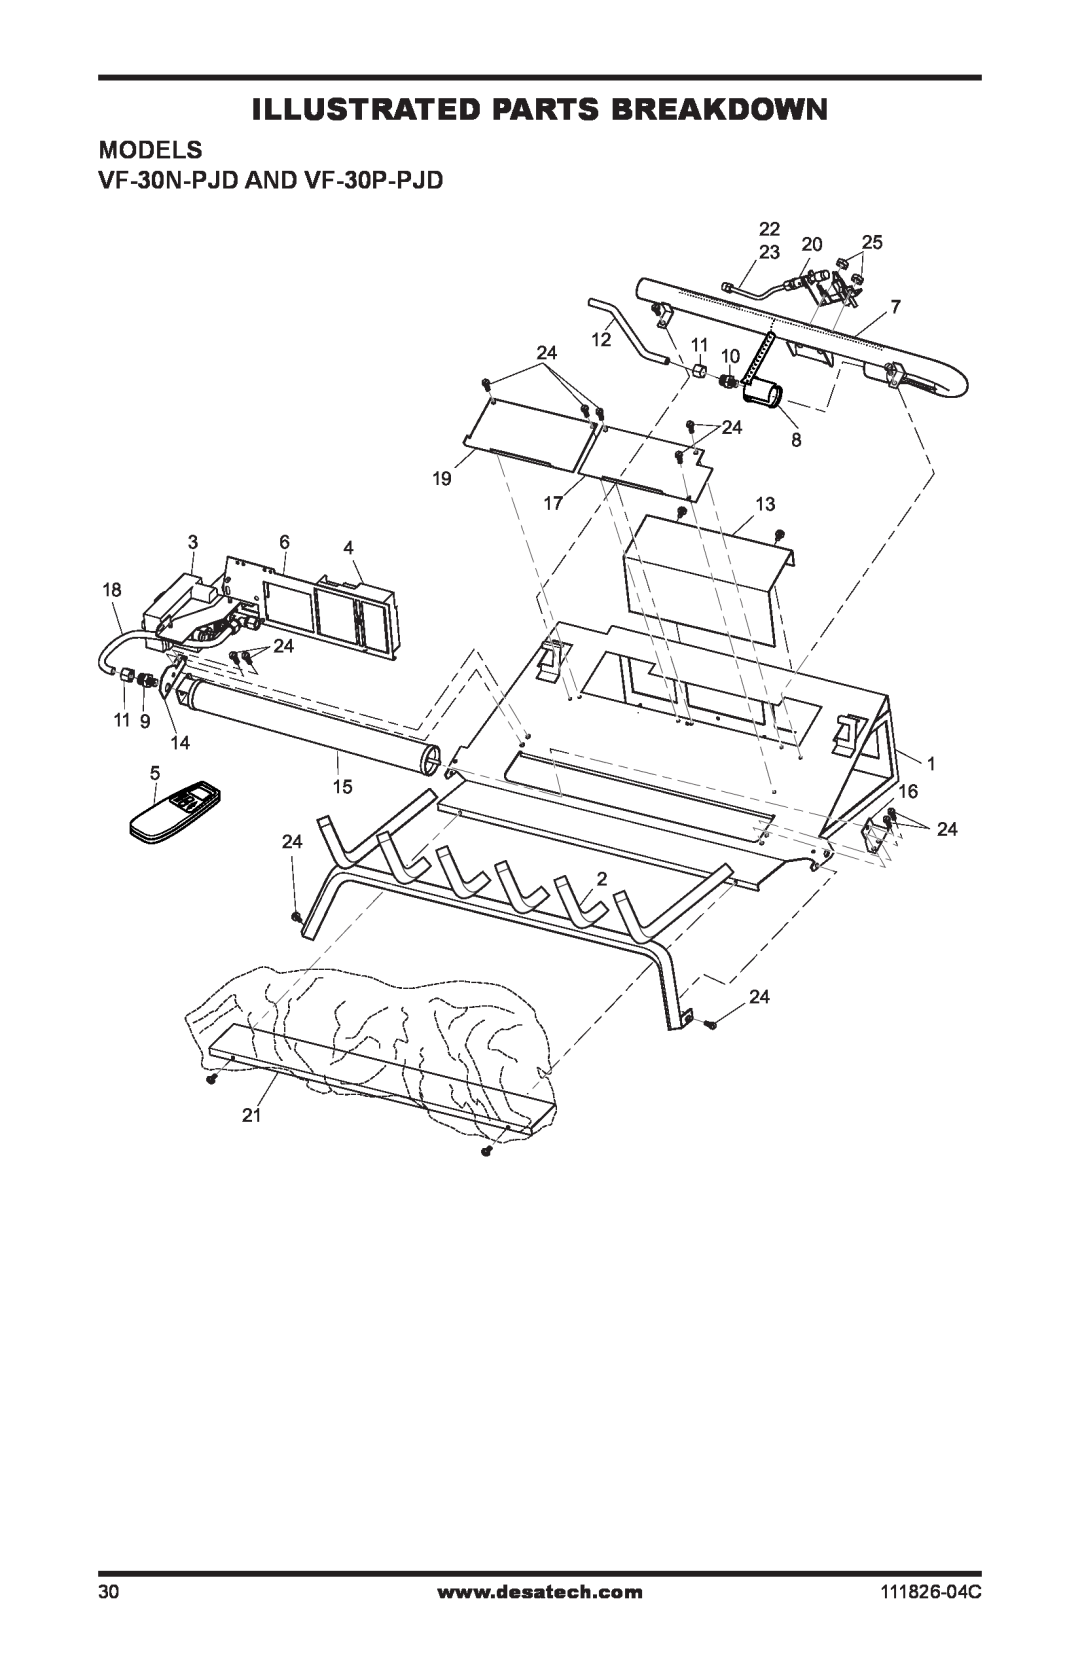 Desa installation manual Illustrated Parts Breakdown, Models VF-30N-PJD and vf-30p-pjd, 111826-04C 